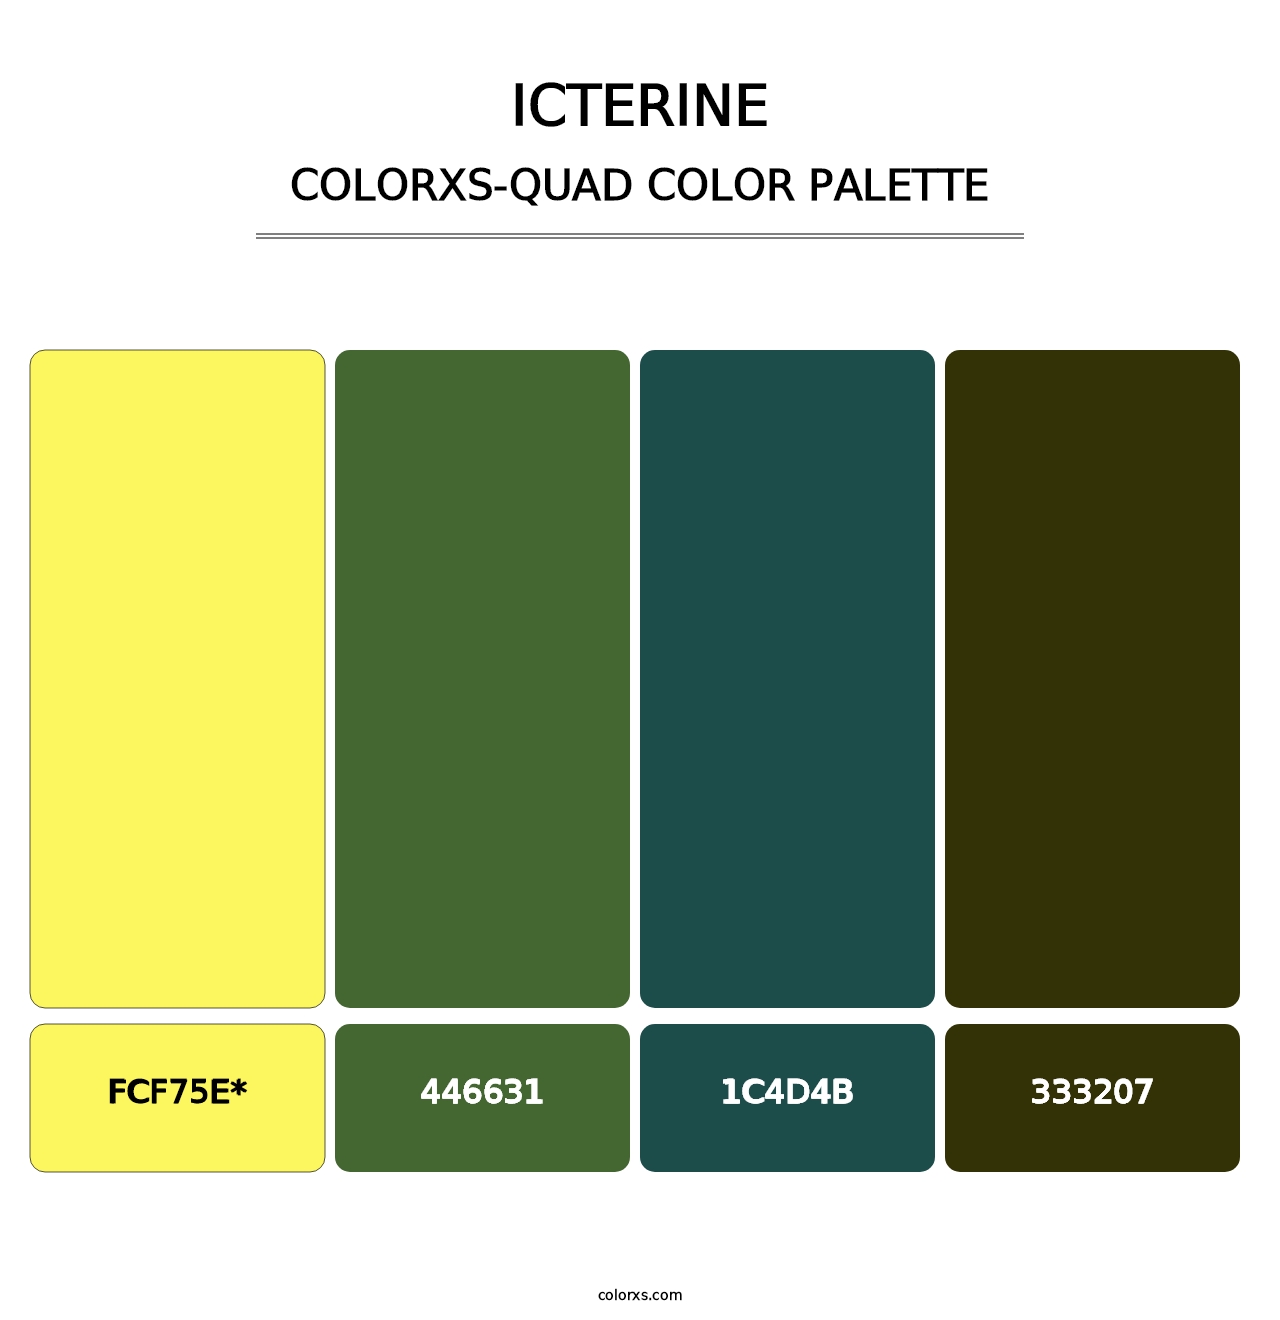 Icterine - Colorxs Quad Palette